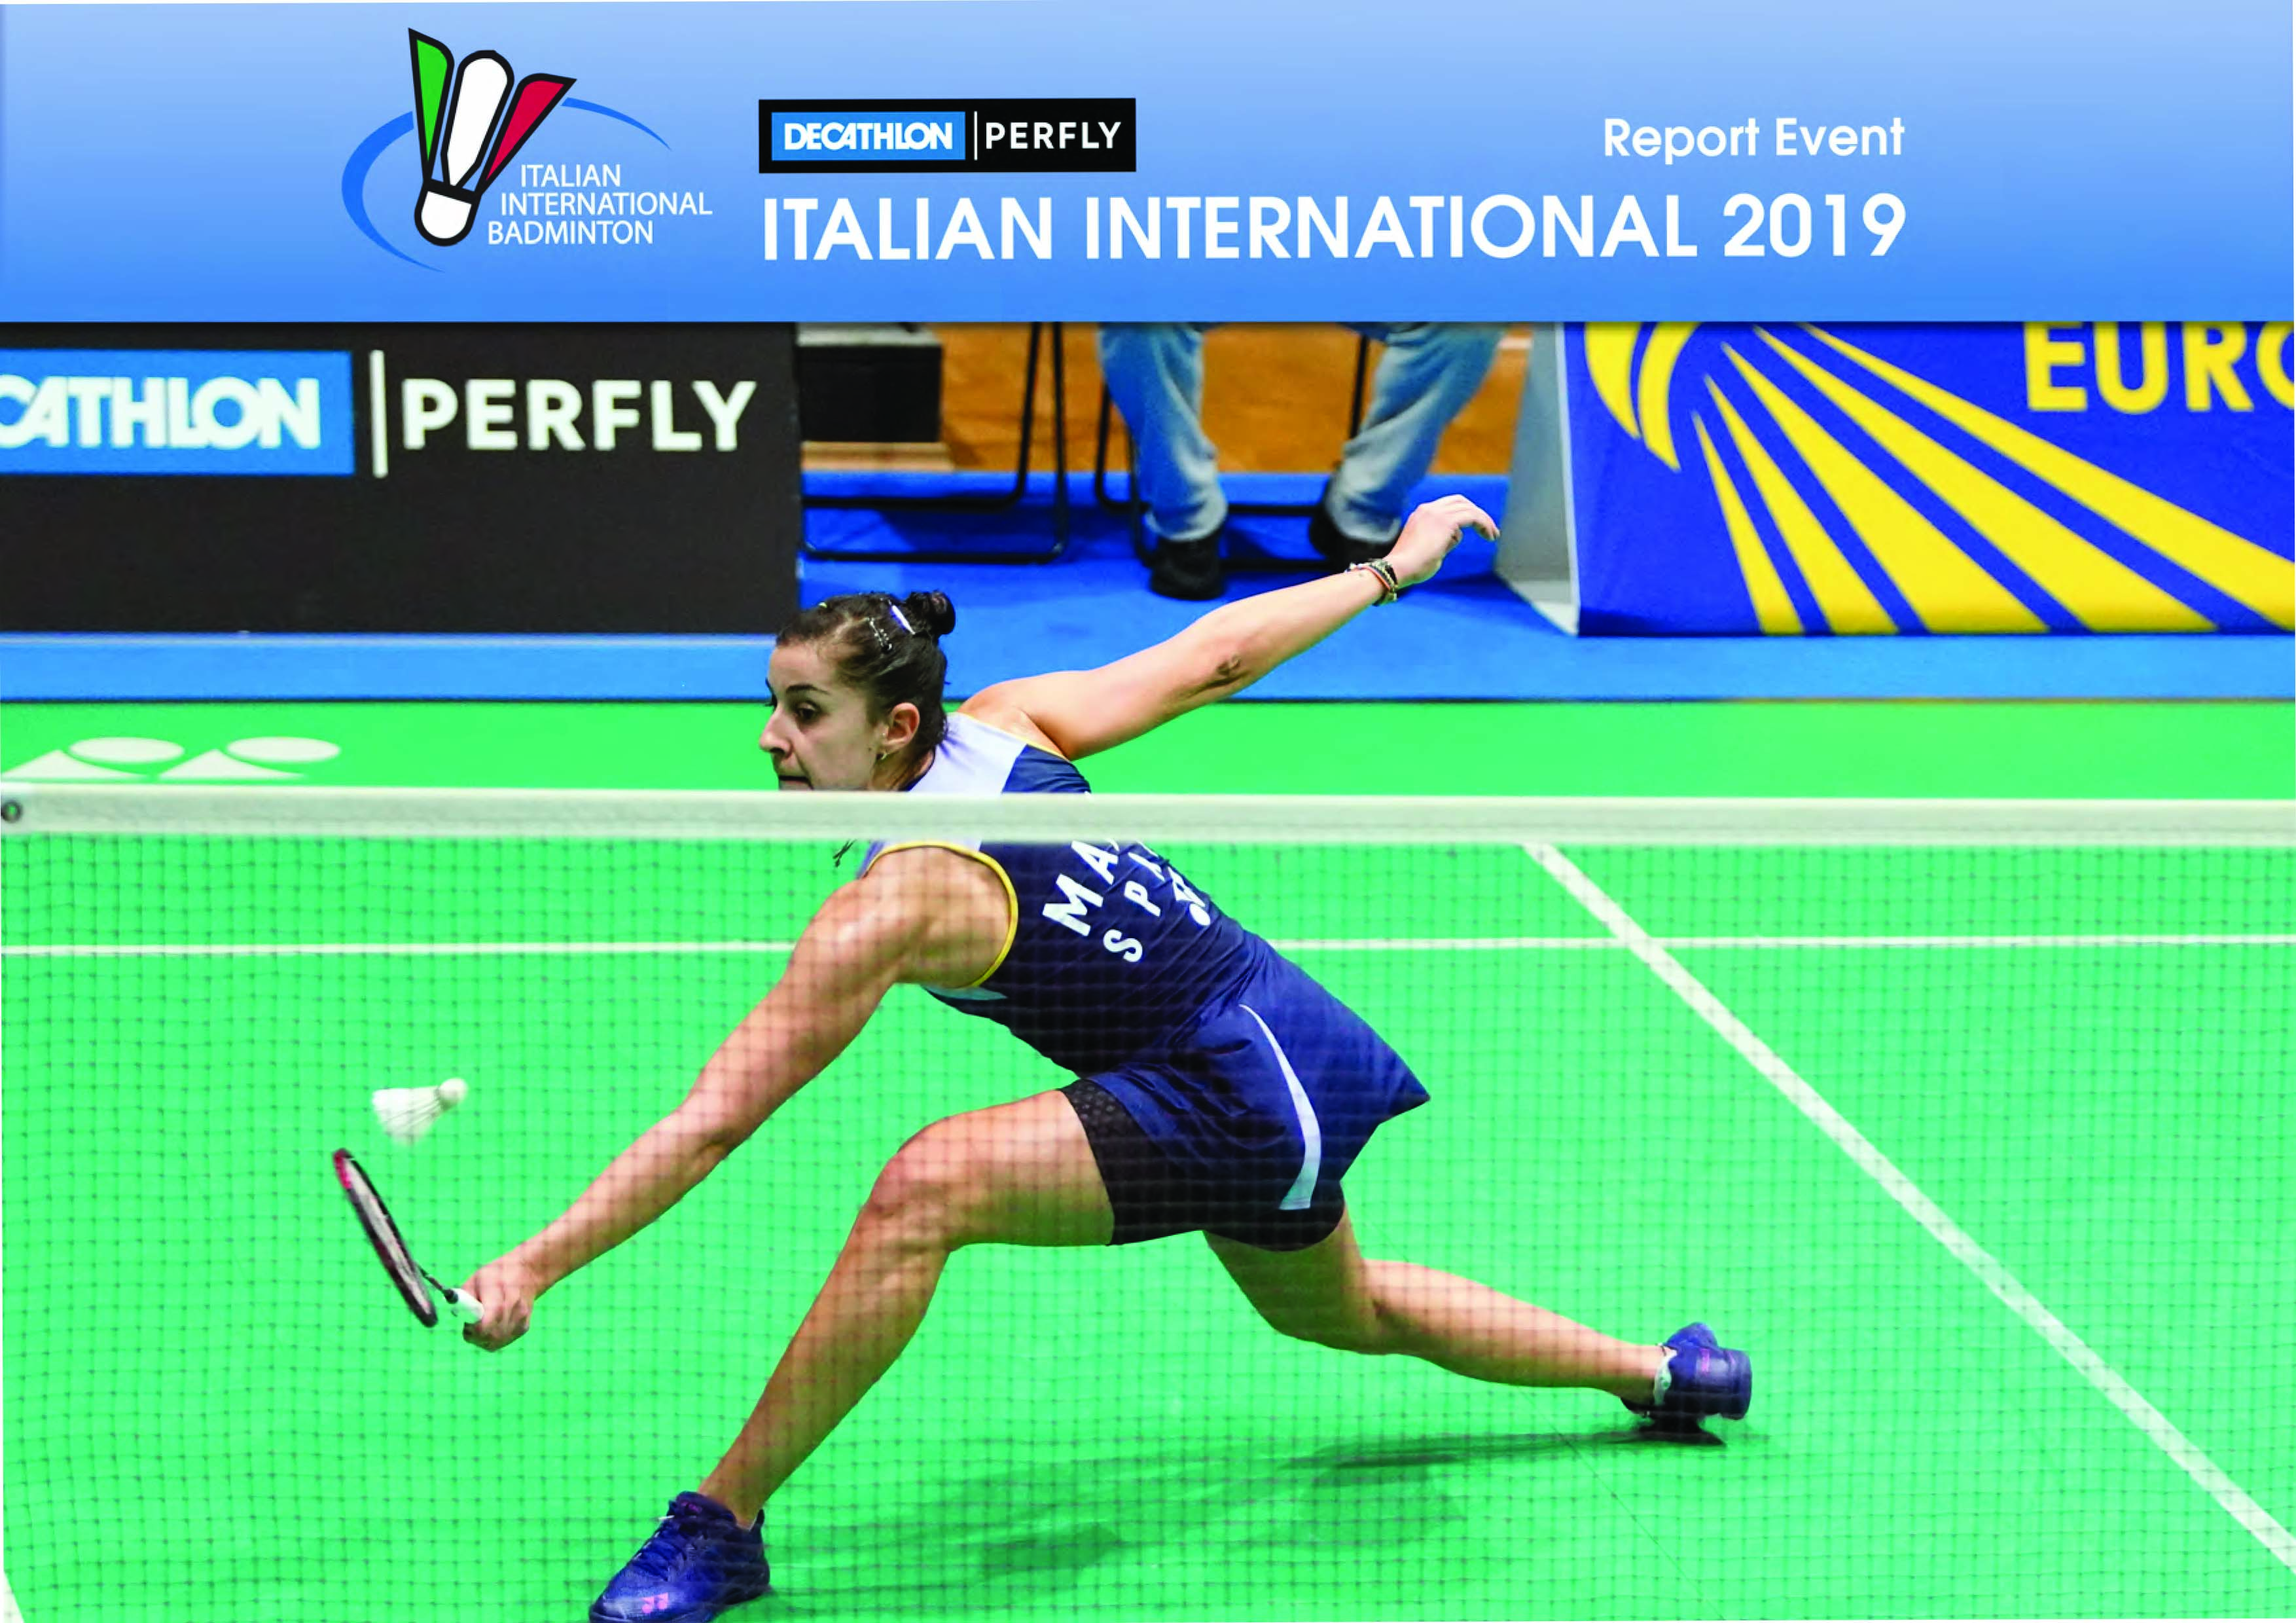 DECATHLON PERFLY ITALIAN INTERNATIONAl 2019 REPORT EVENT small